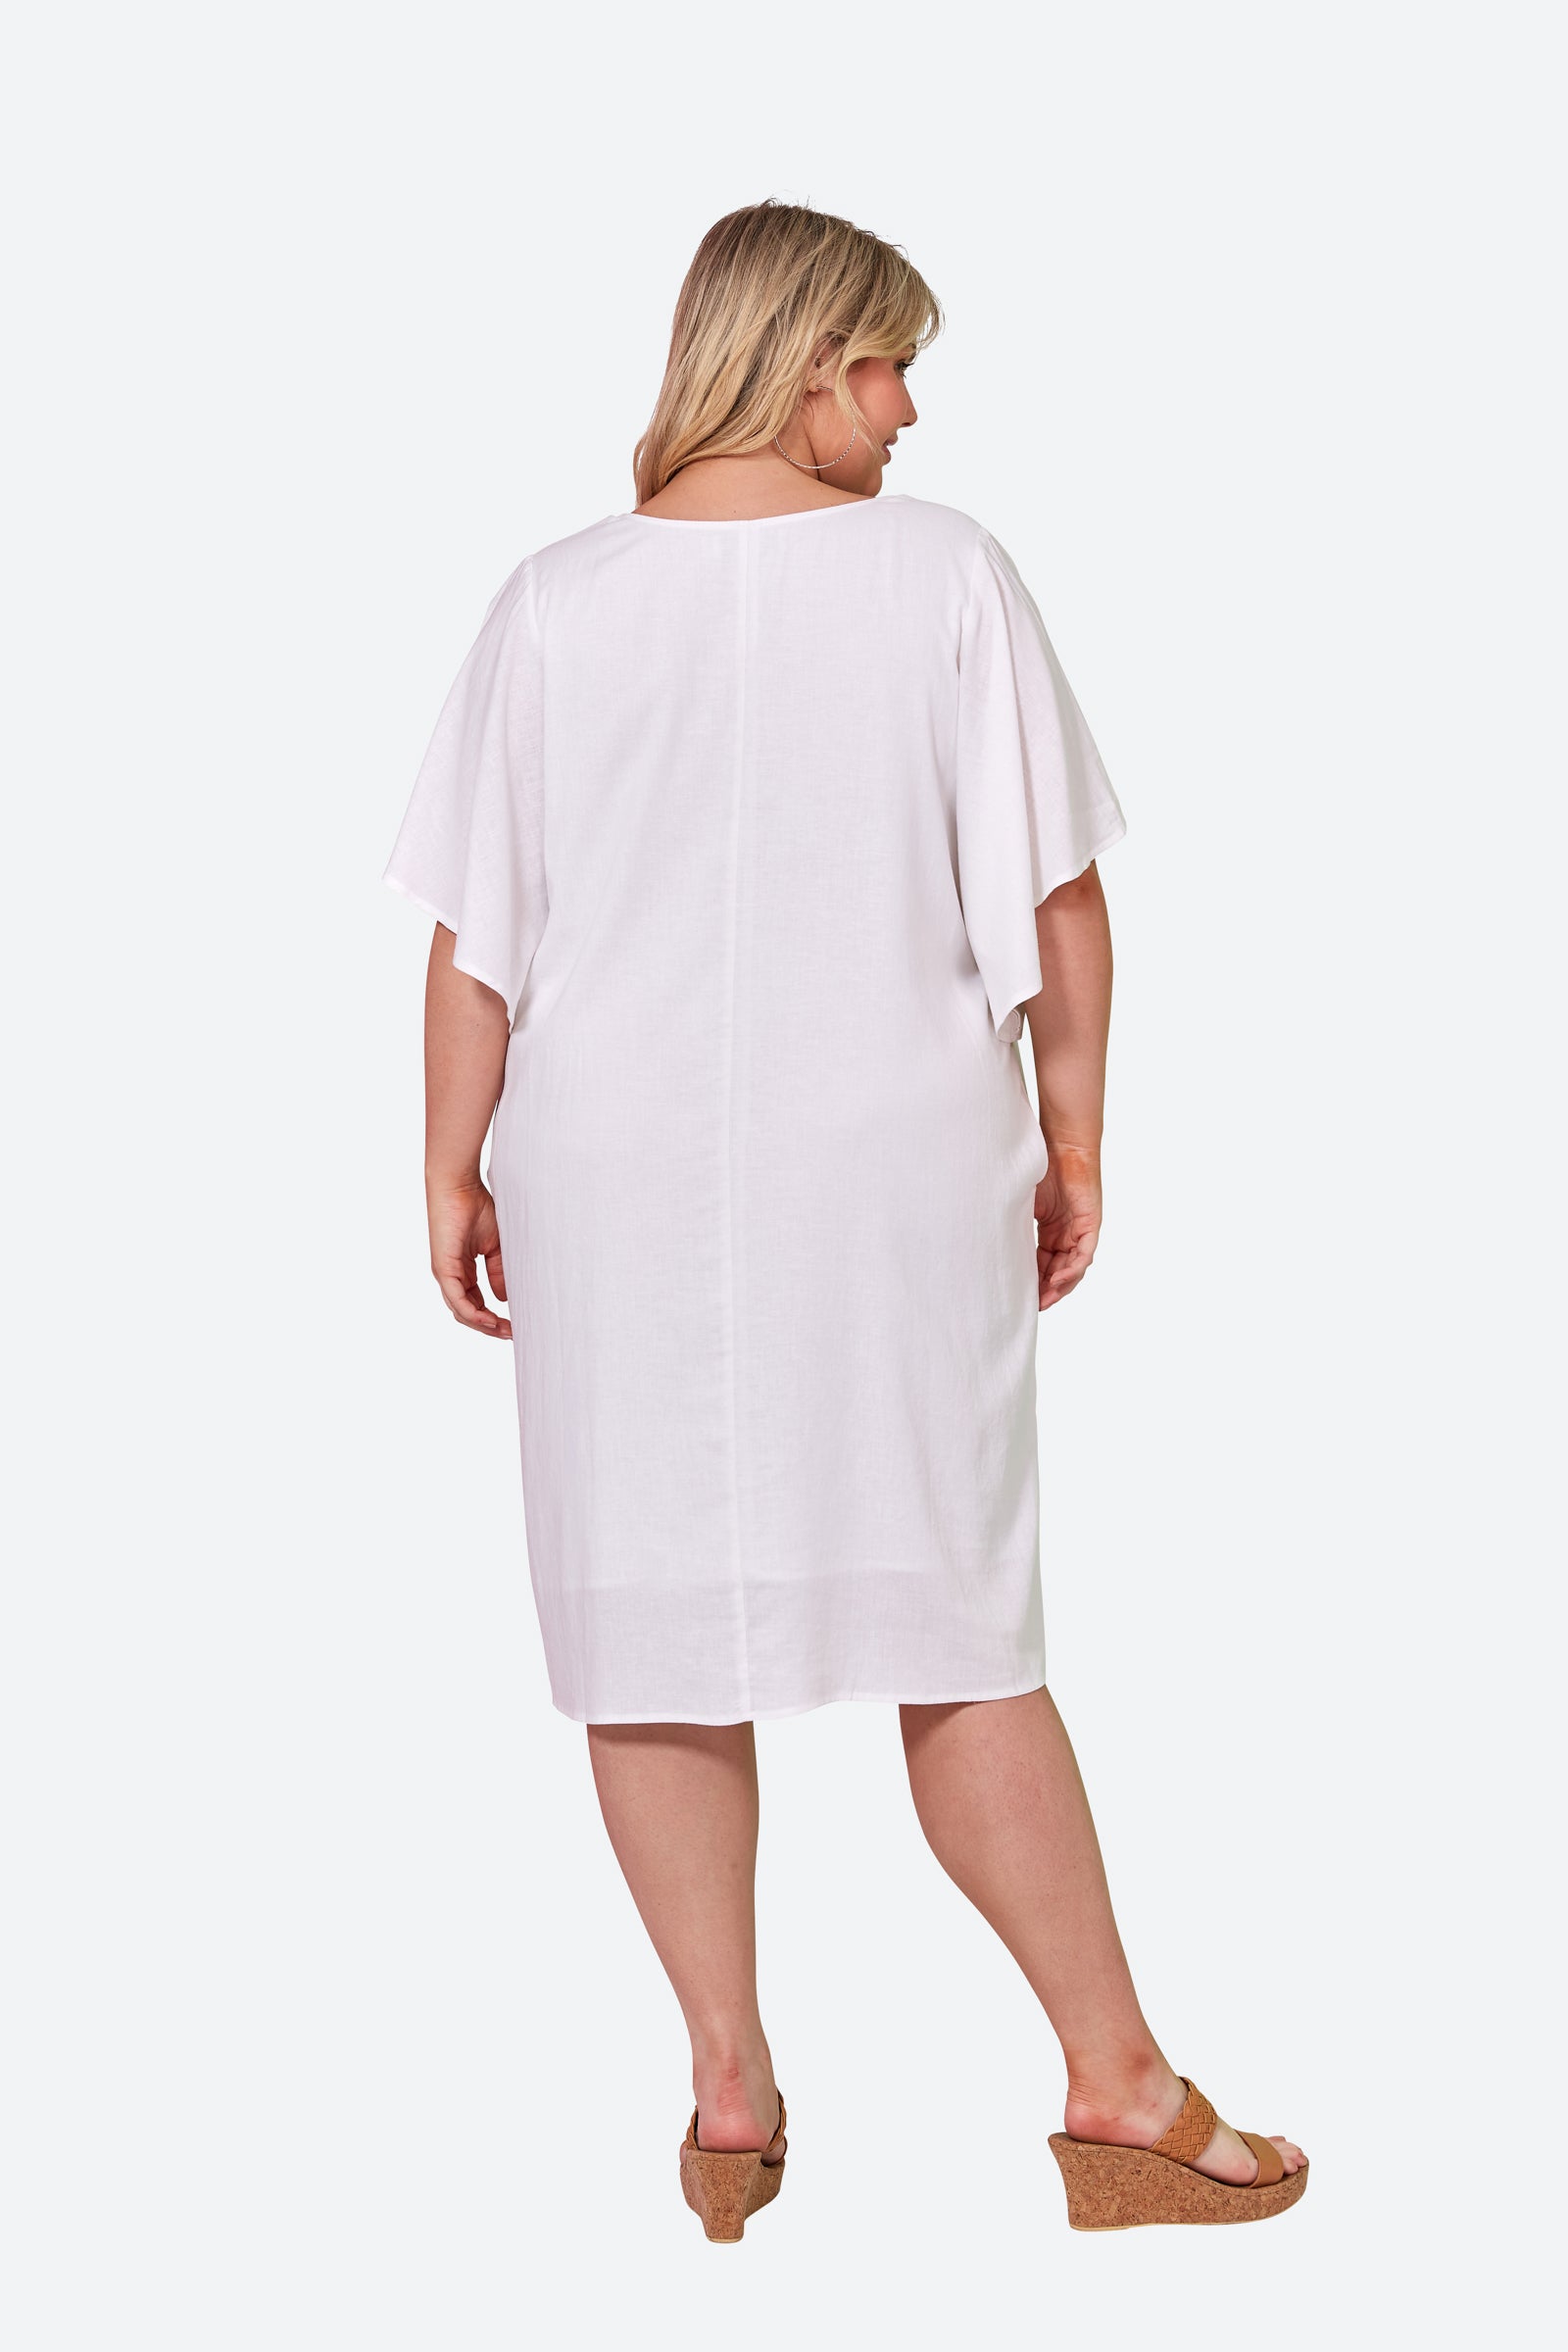 Verve Dress - Blanc - eb&ive Clothing - Dress Mid Linen